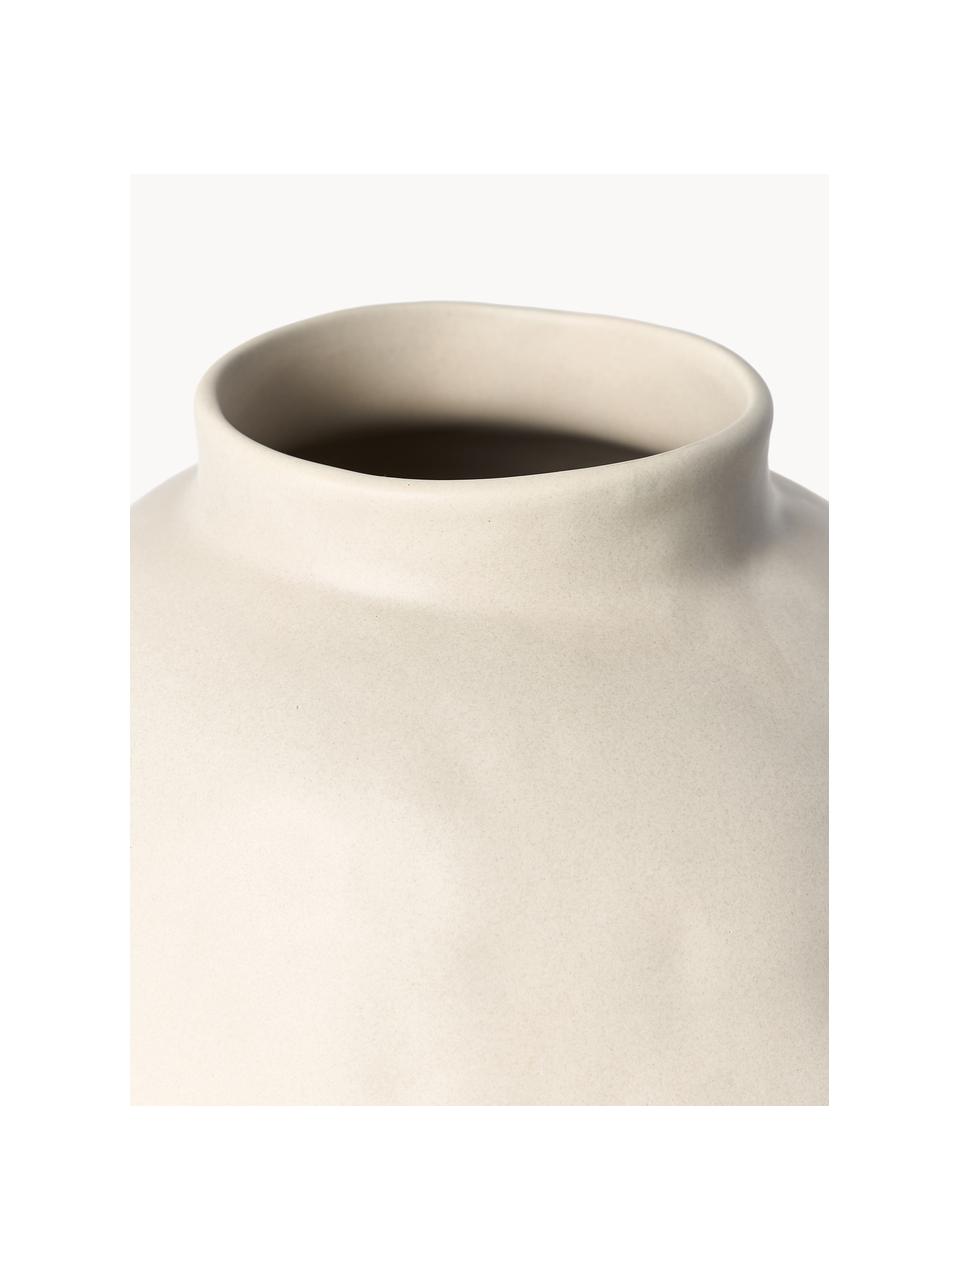 Vaso di design in ceramica fatto a mano Saki, alt. 32 cm, Ceramica, Beige chiaro, Ø 25 x Alt. 32 cm